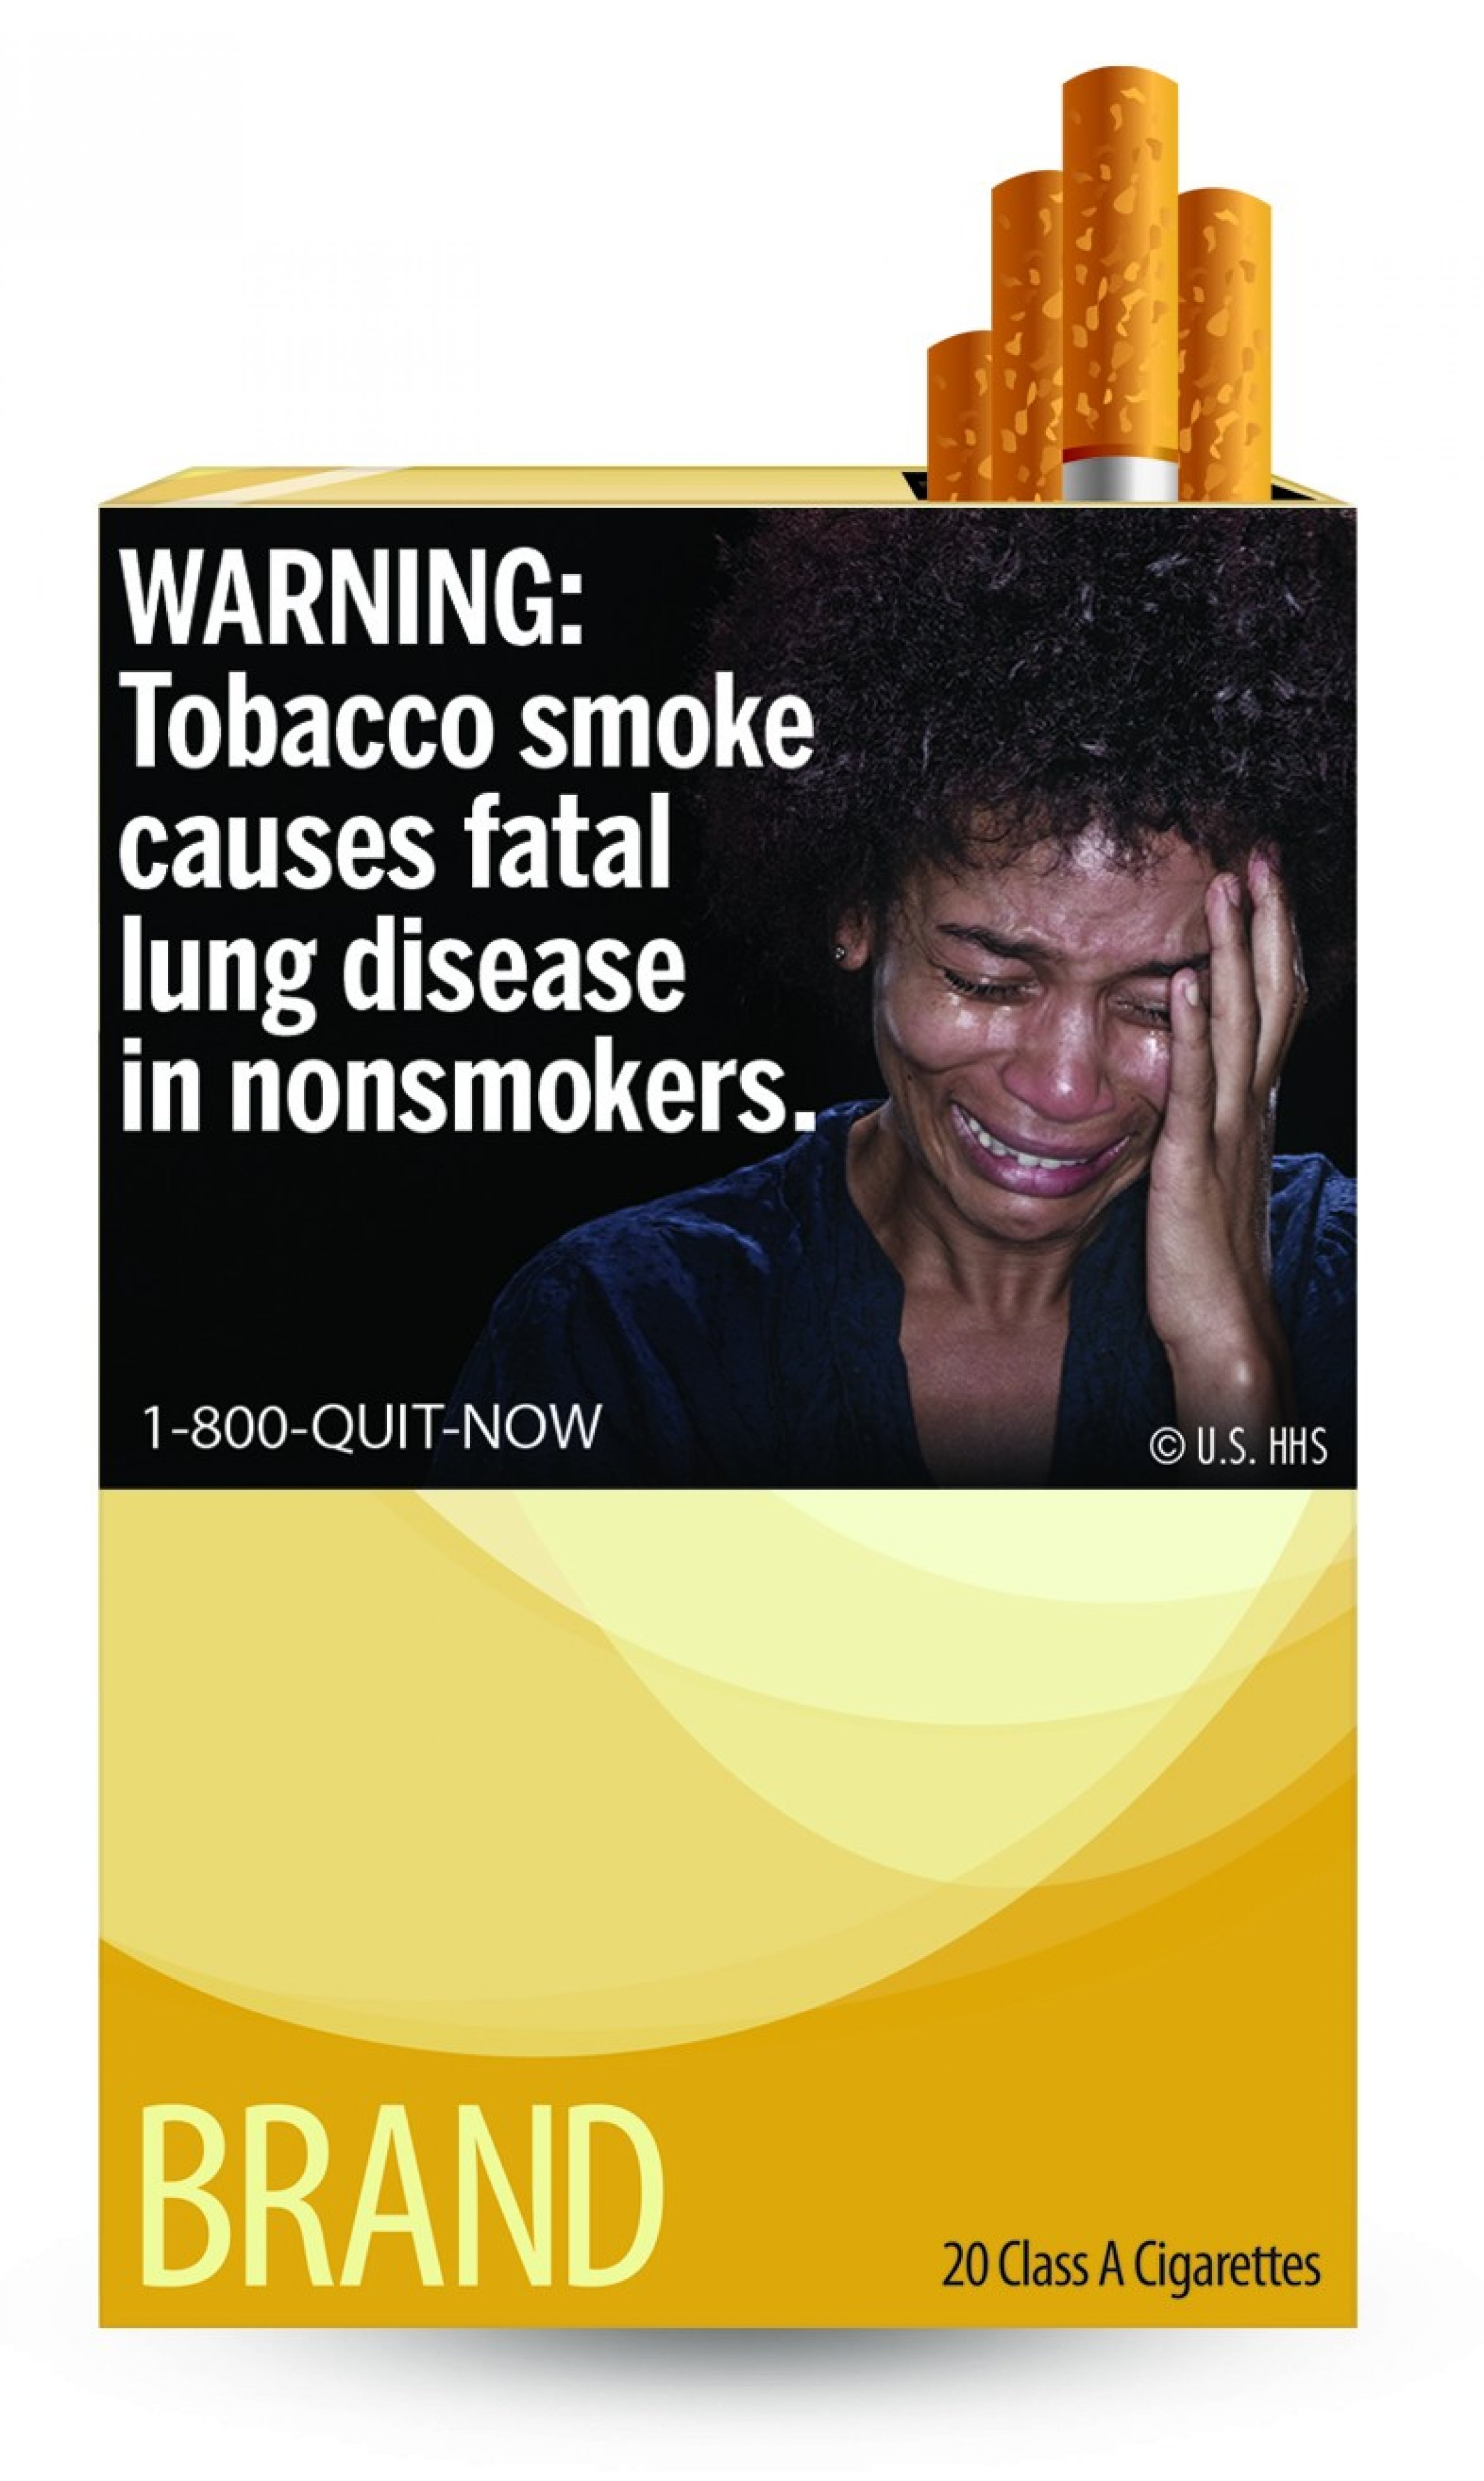 WARNING Tobacco smoke causes fatal lung disease in nonsmokers.